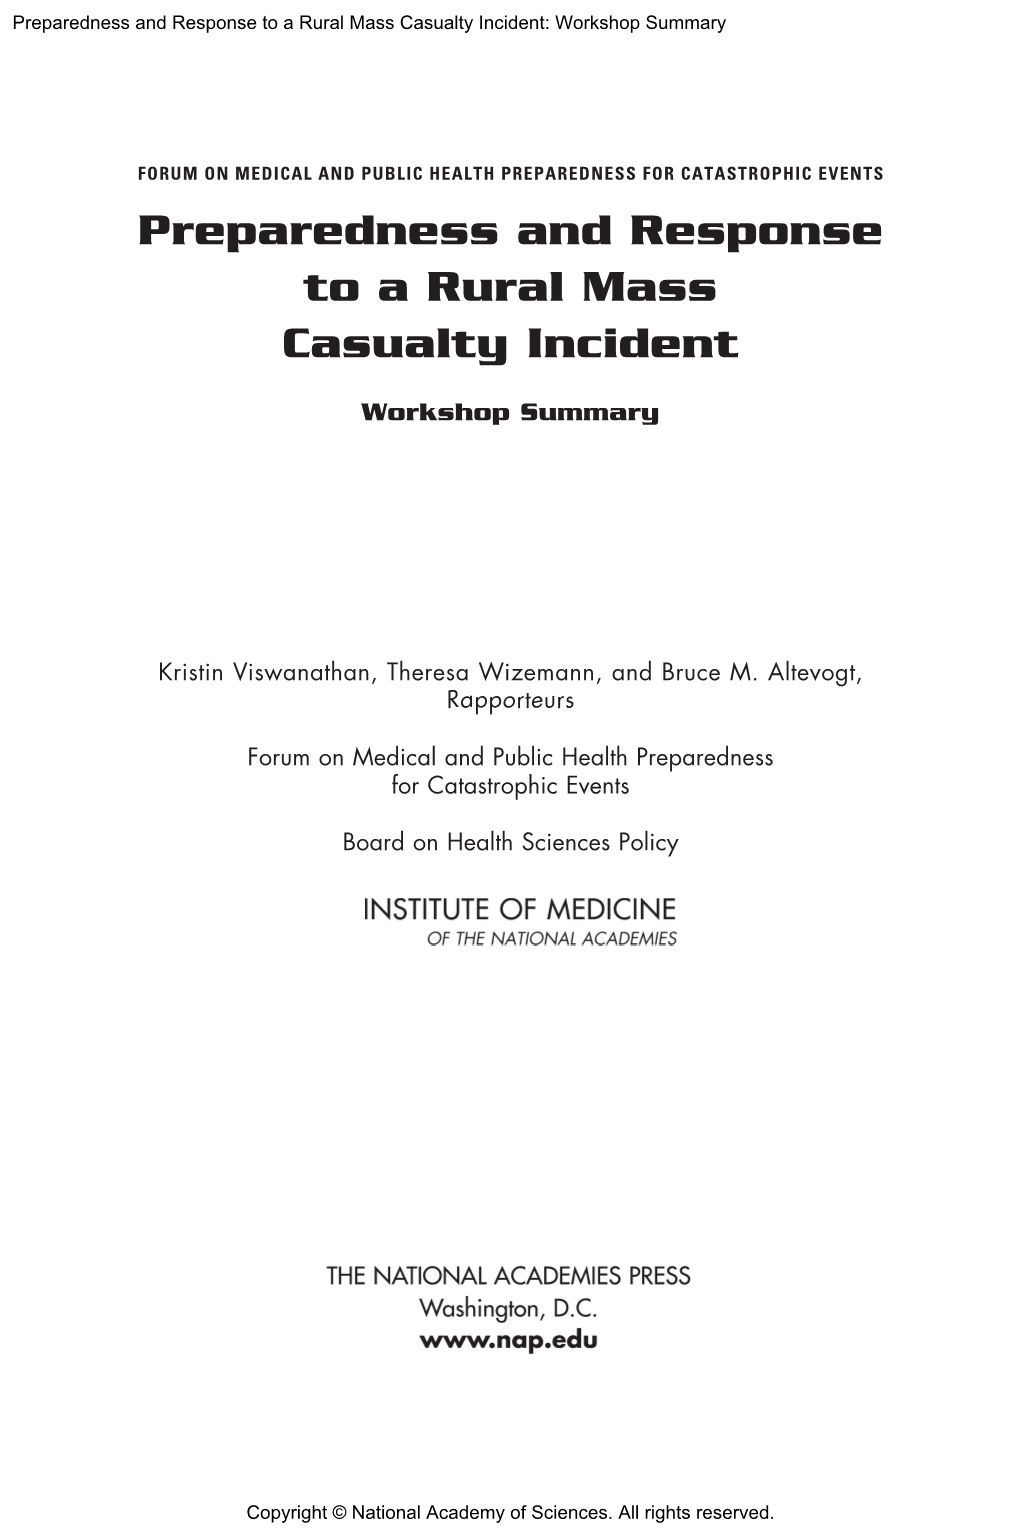 IOM Preparedness Response Rural Mass Casualty Incident 2011